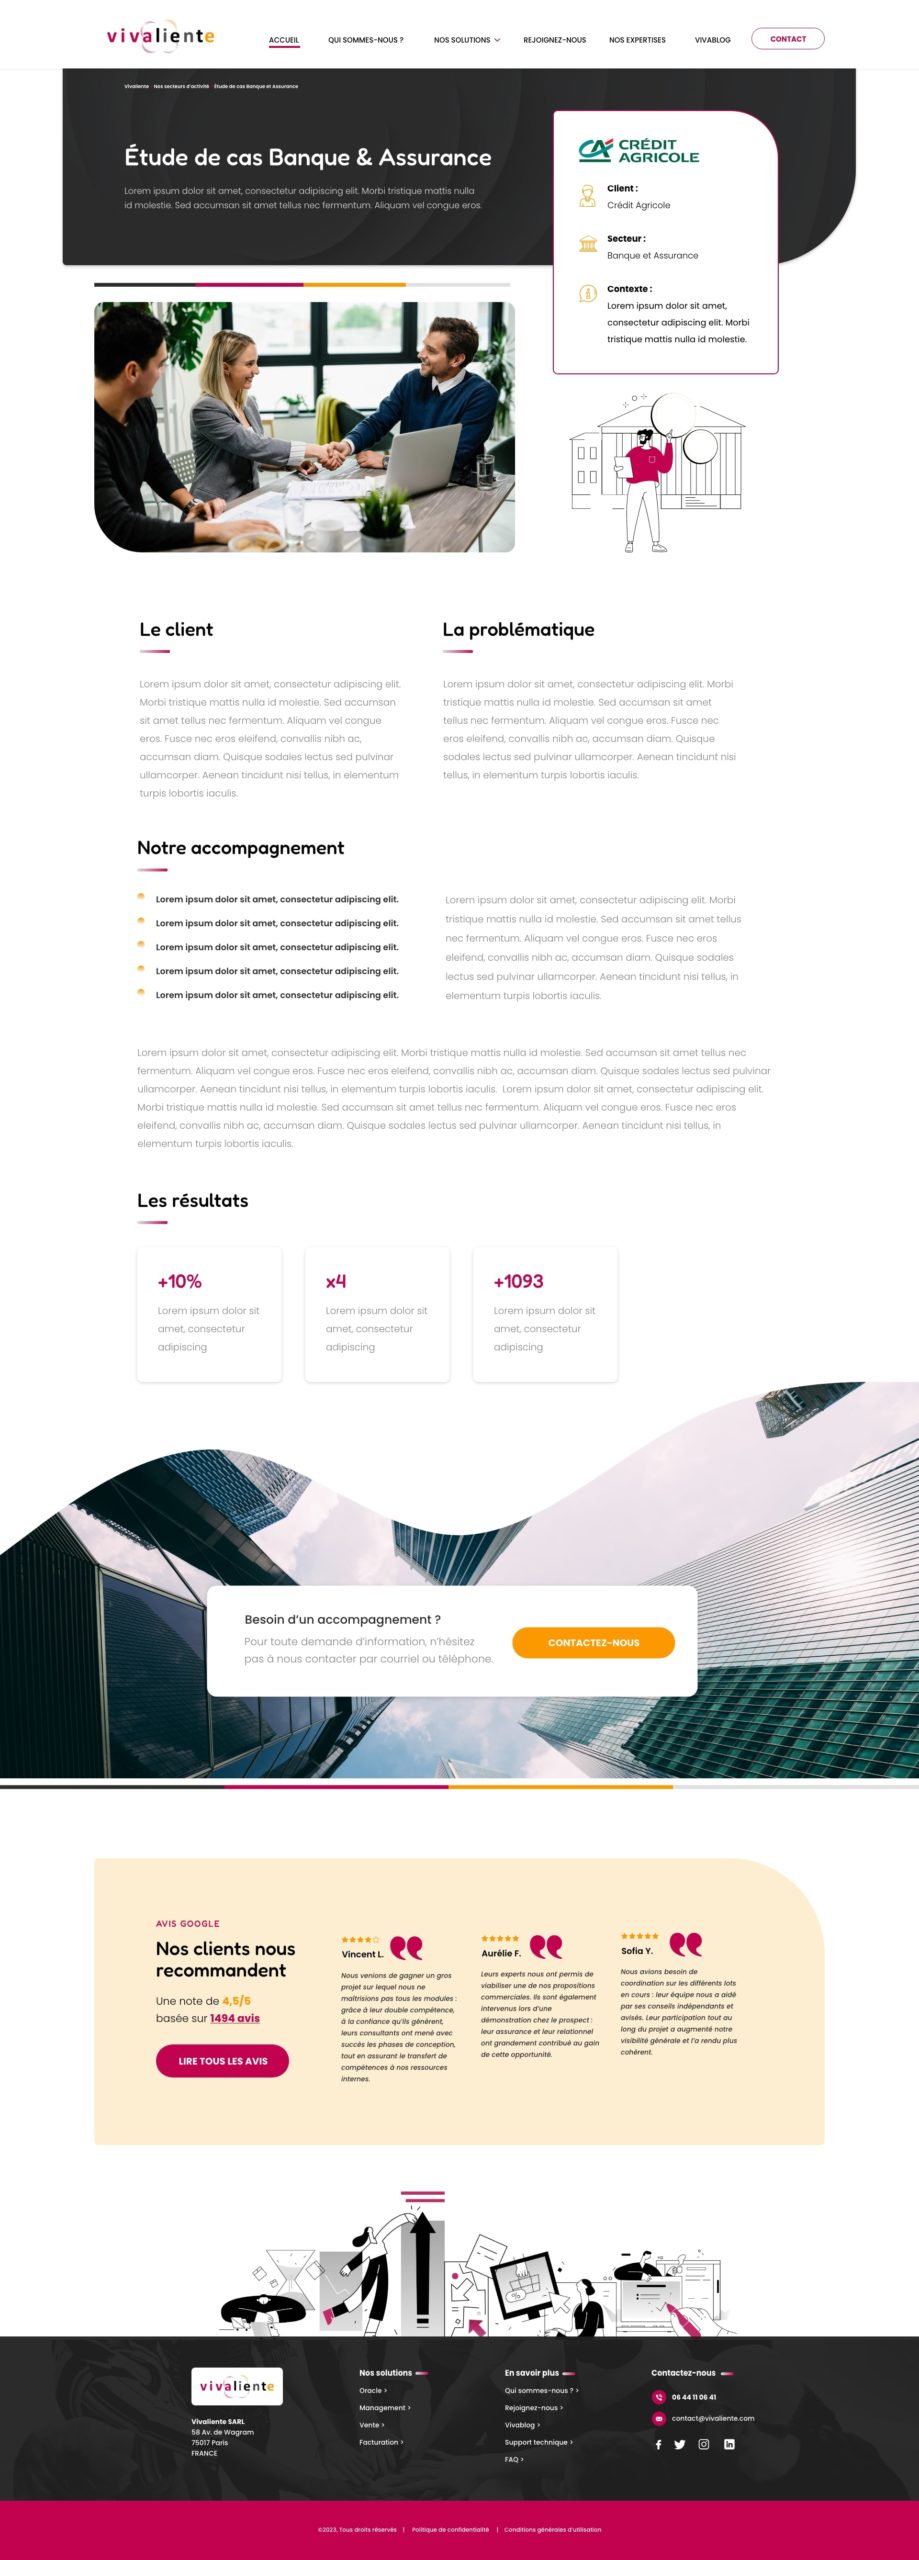 design site web vivaliente